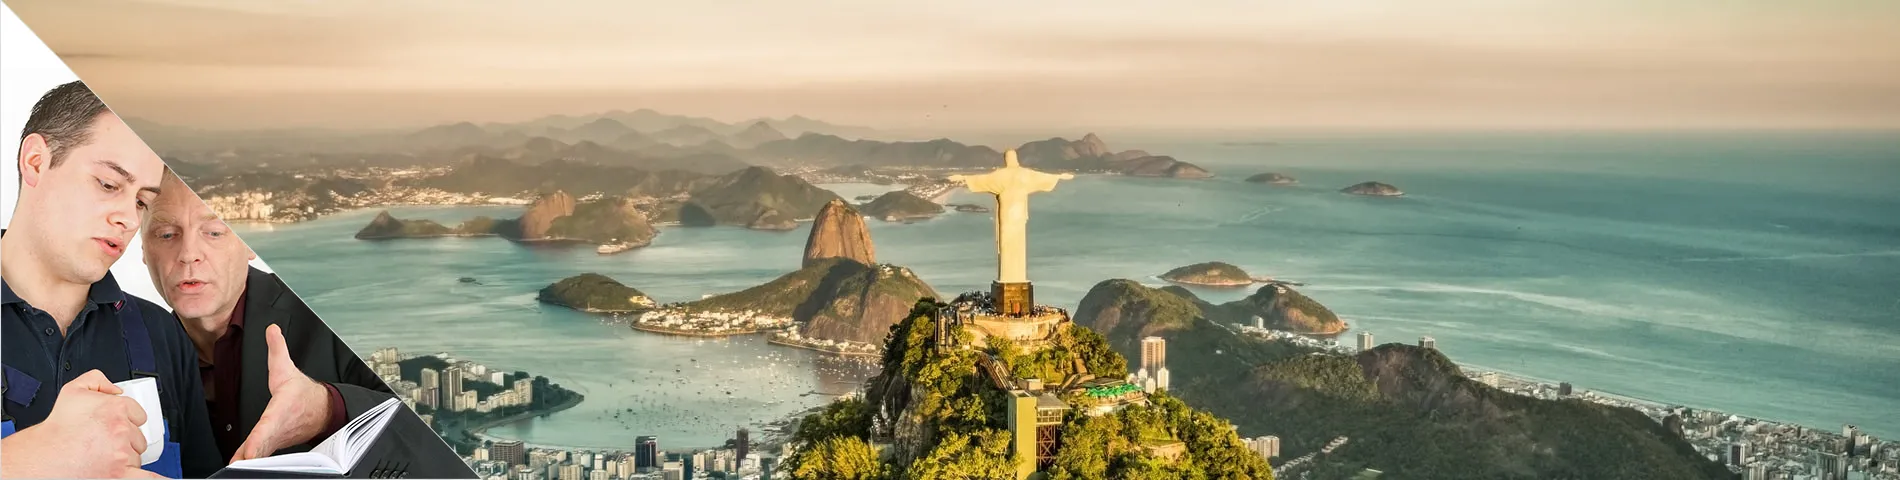 Rio de Janeiro - Bire_Bir